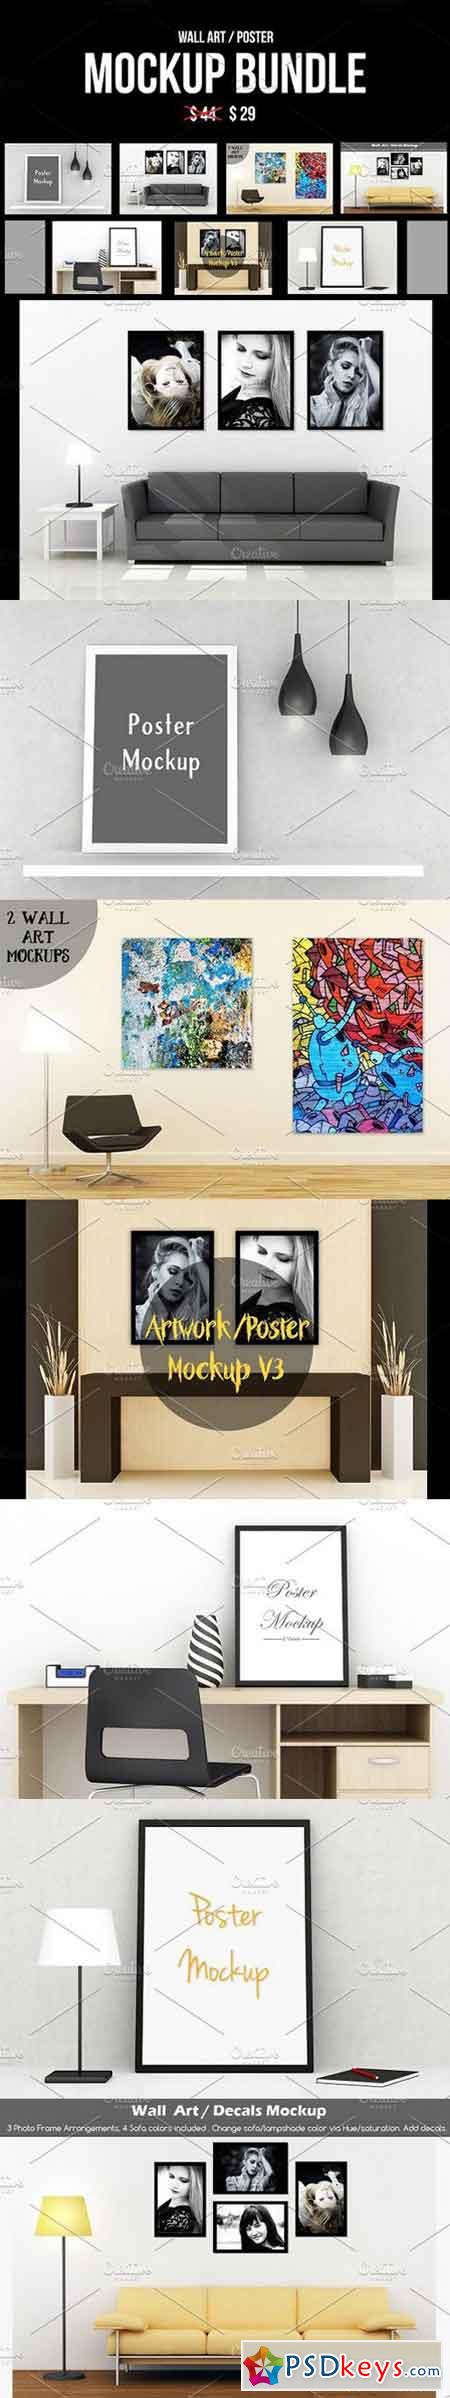 Download Wall Art Poster Mockups Bundle 2 1047857 » Free Download ...